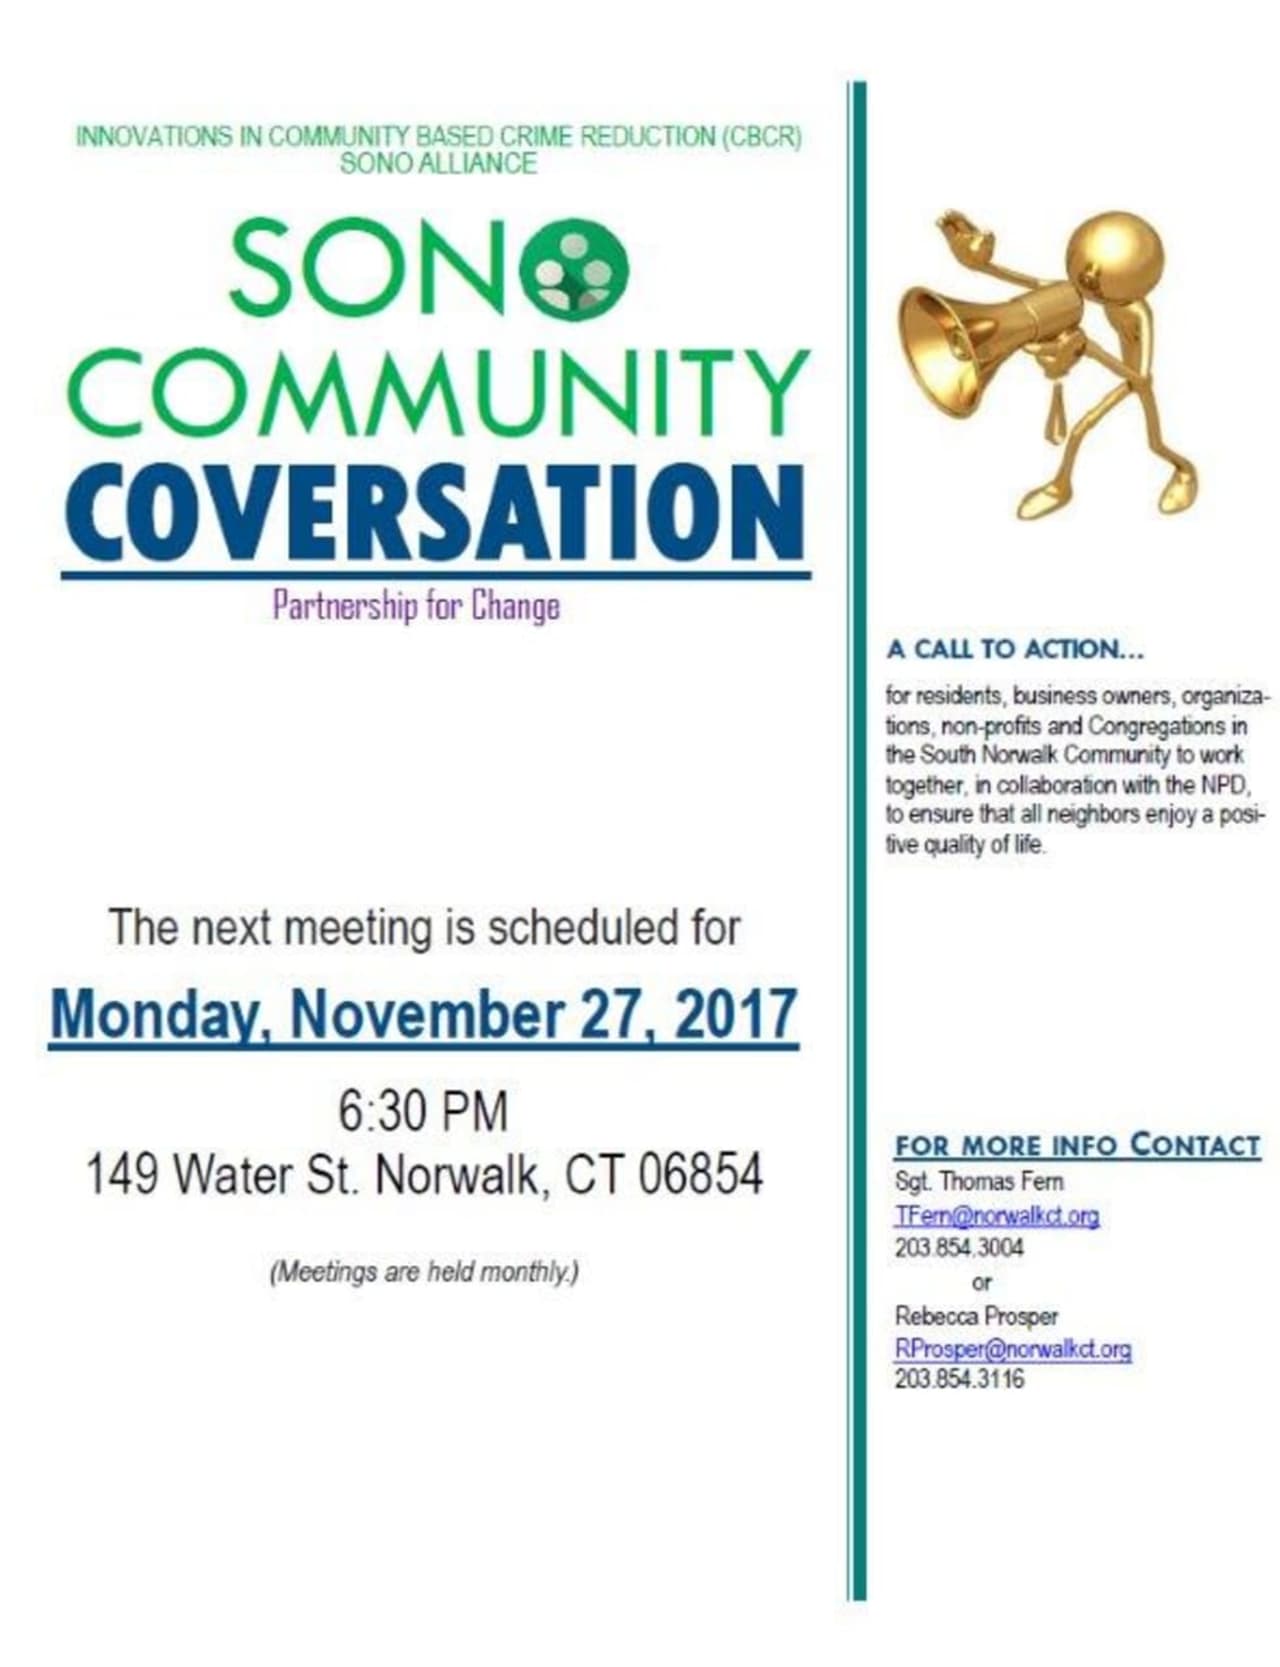 The next SoNo Community Conversation will be held Monday, Nov. 27